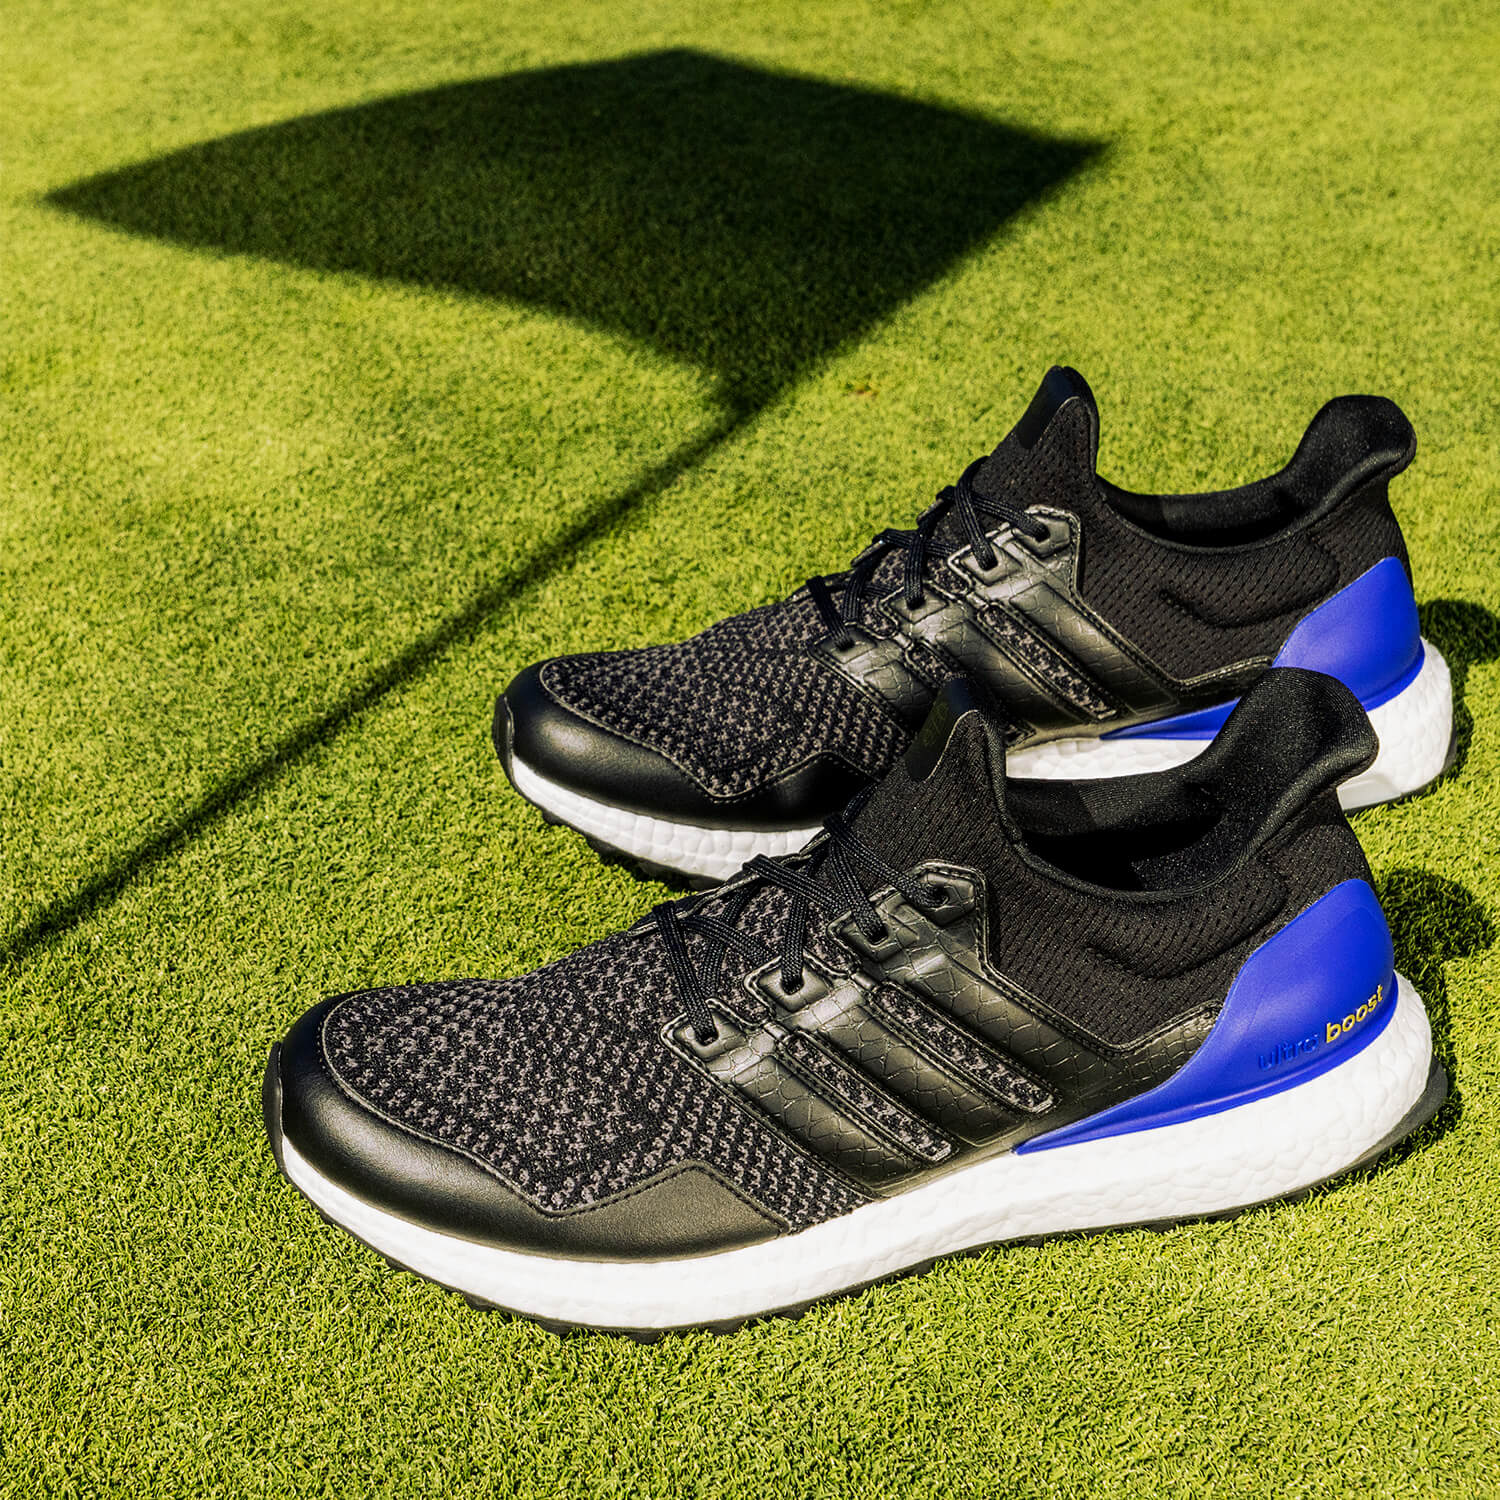 adidas Ultraboost Golf Shoe Black/Lucid Blue | Scottsdale Golf